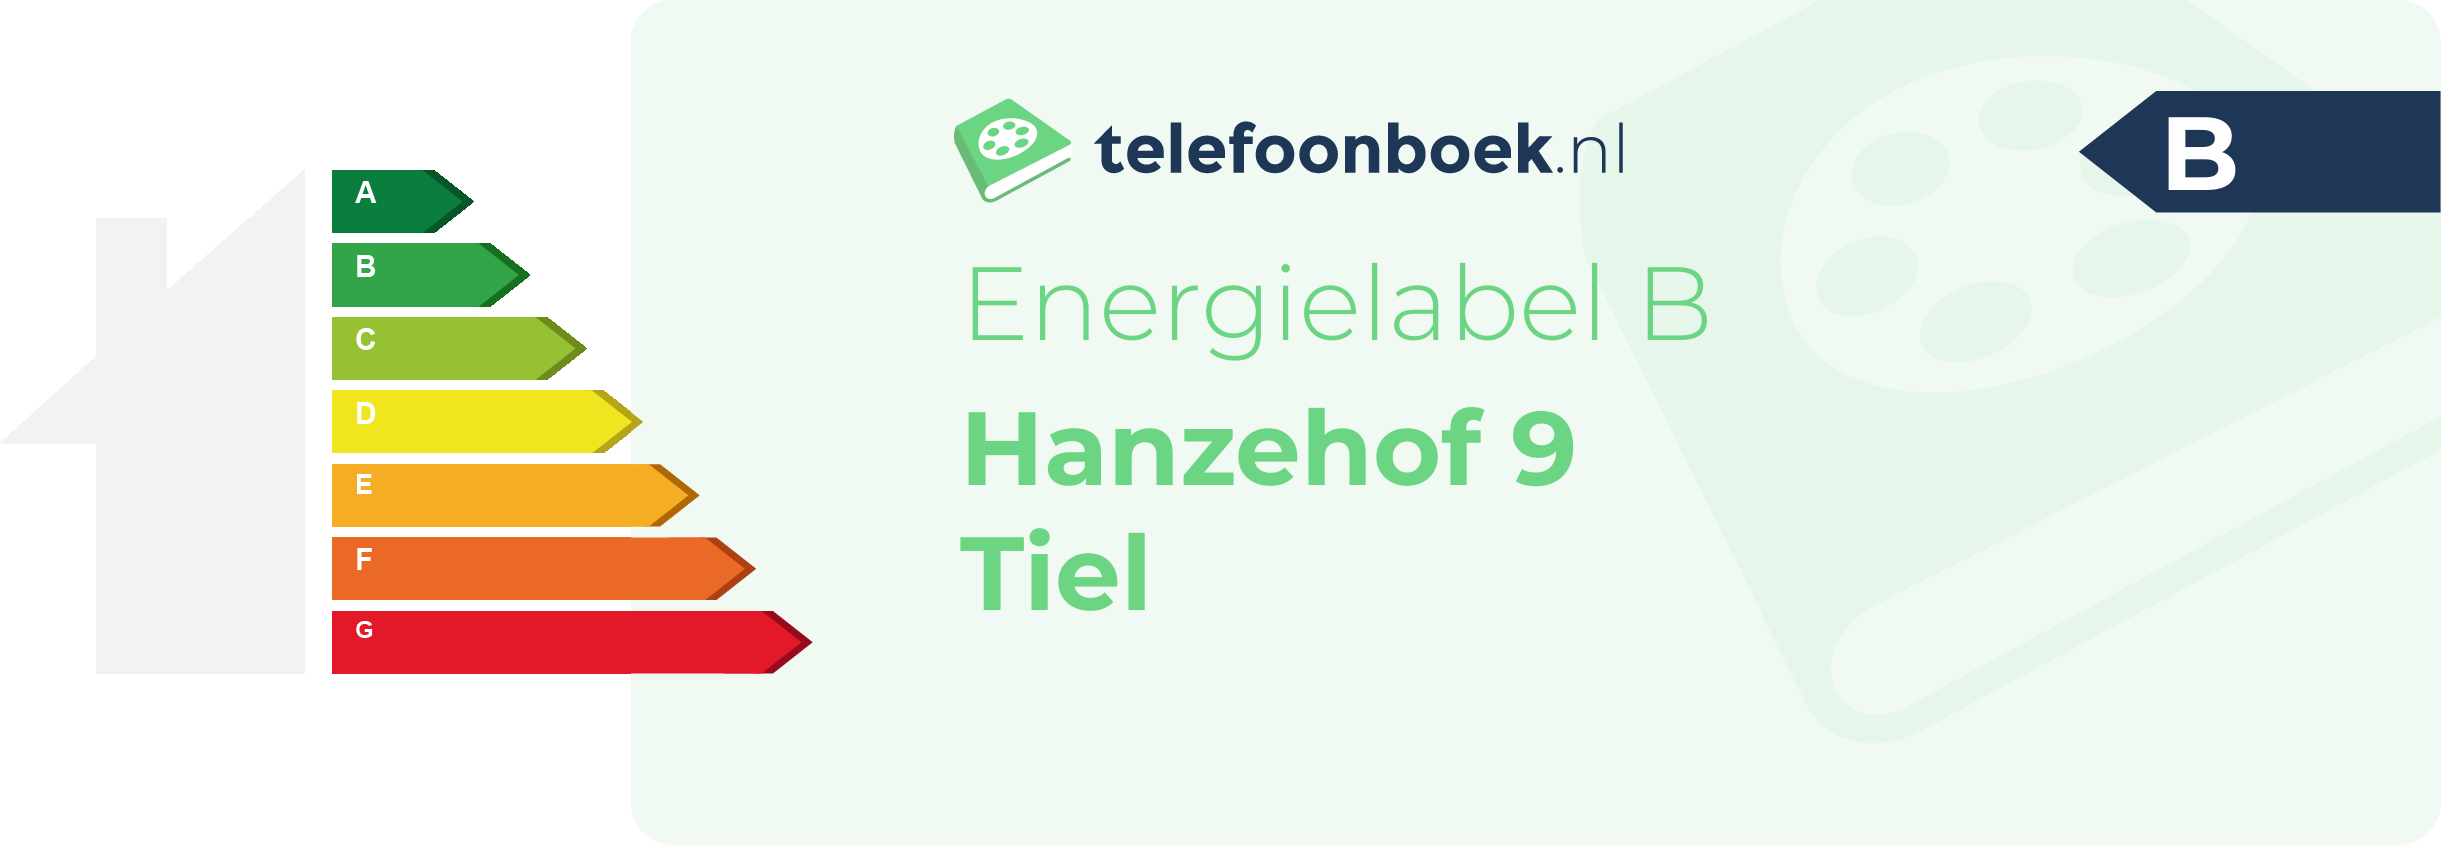 Energielabel Hanzehof 9 Tiel